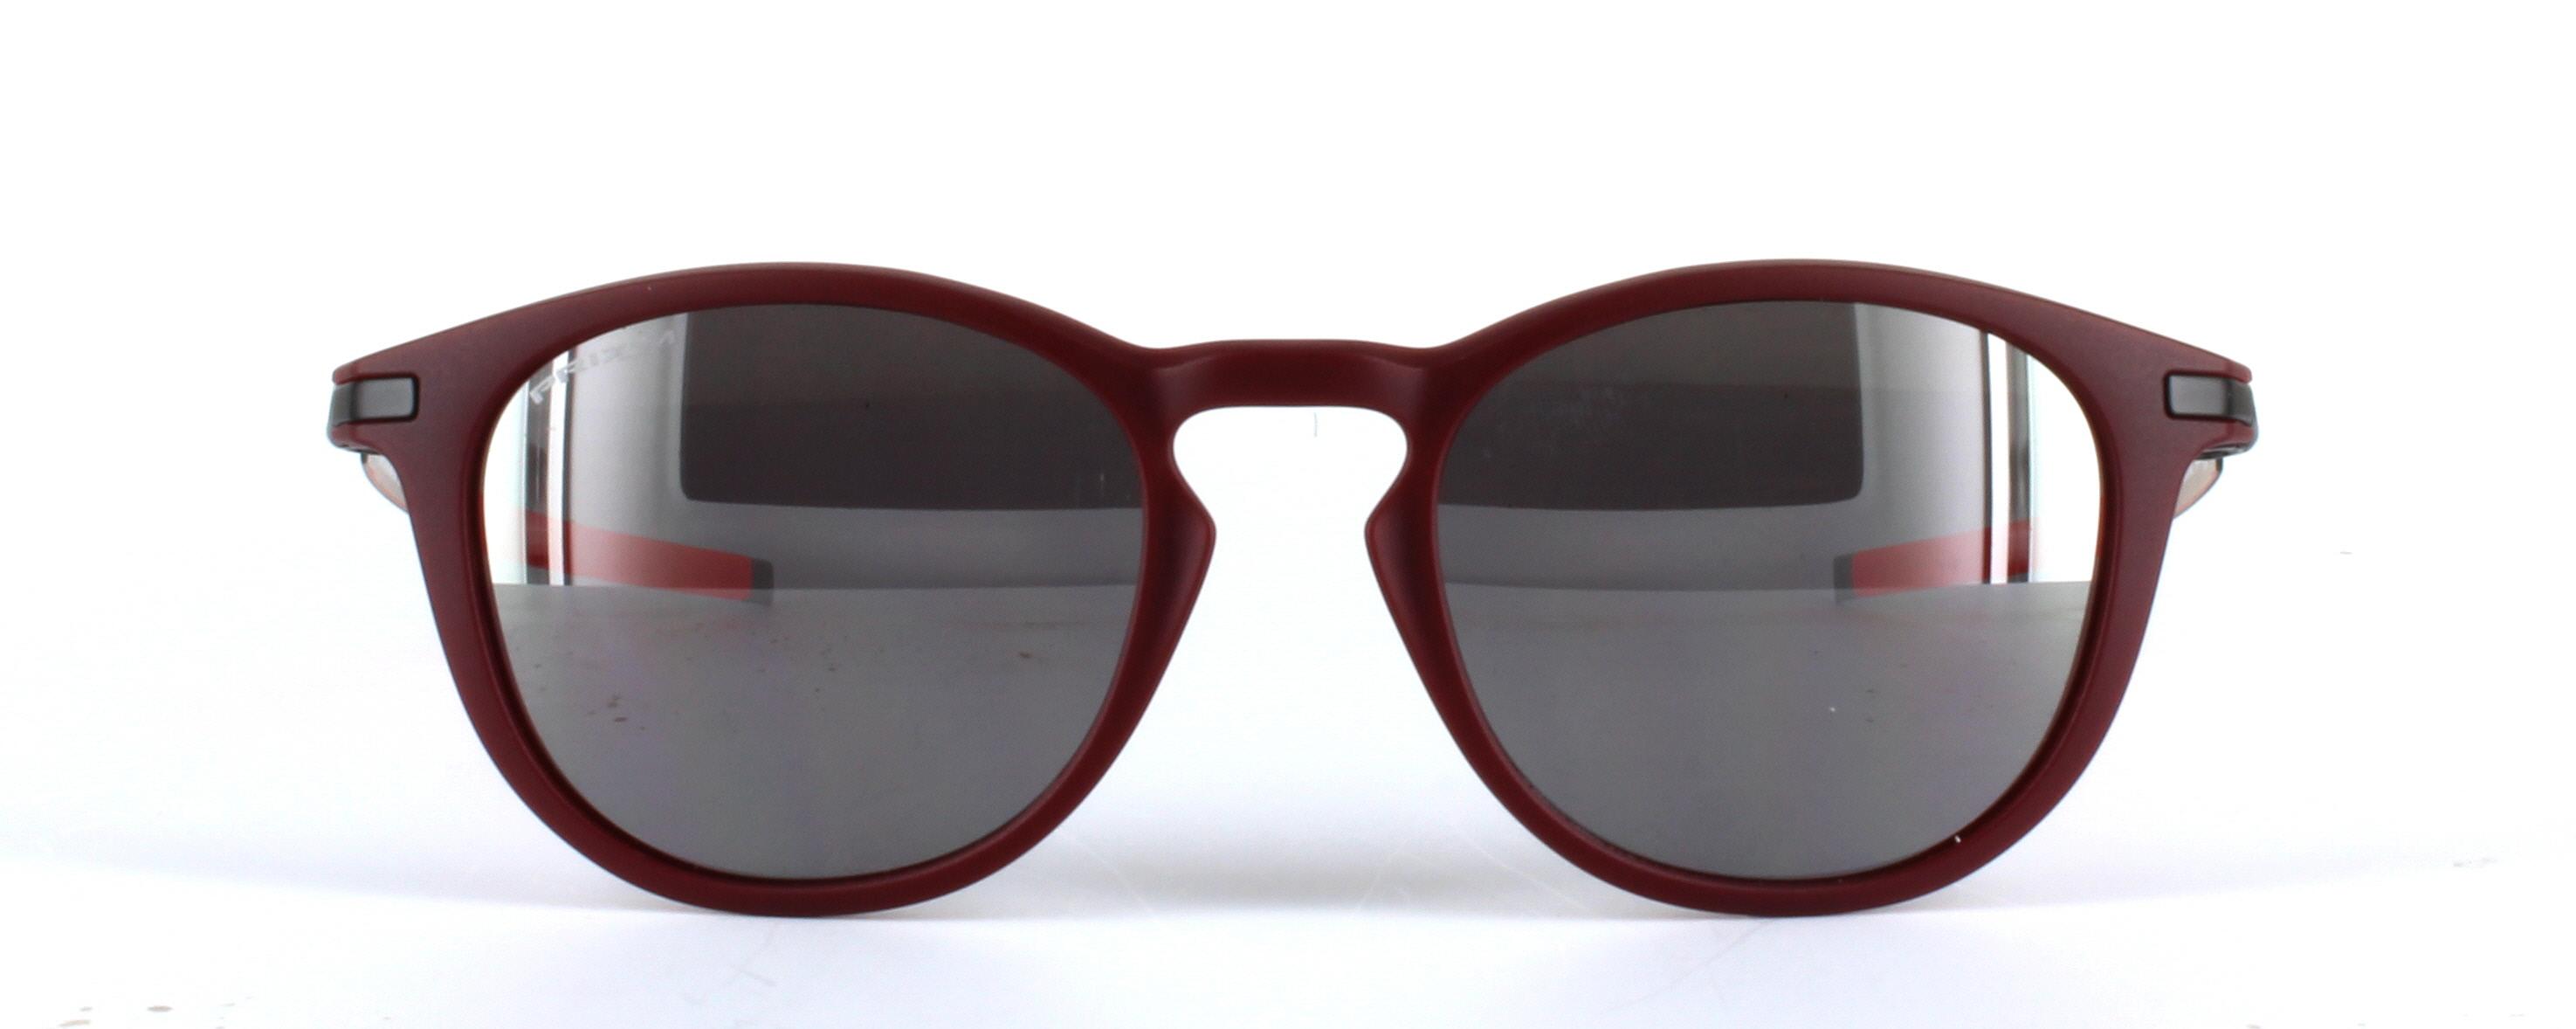 Oakley 9439 Prescription Sunglasses Burgundy | Glasses2You